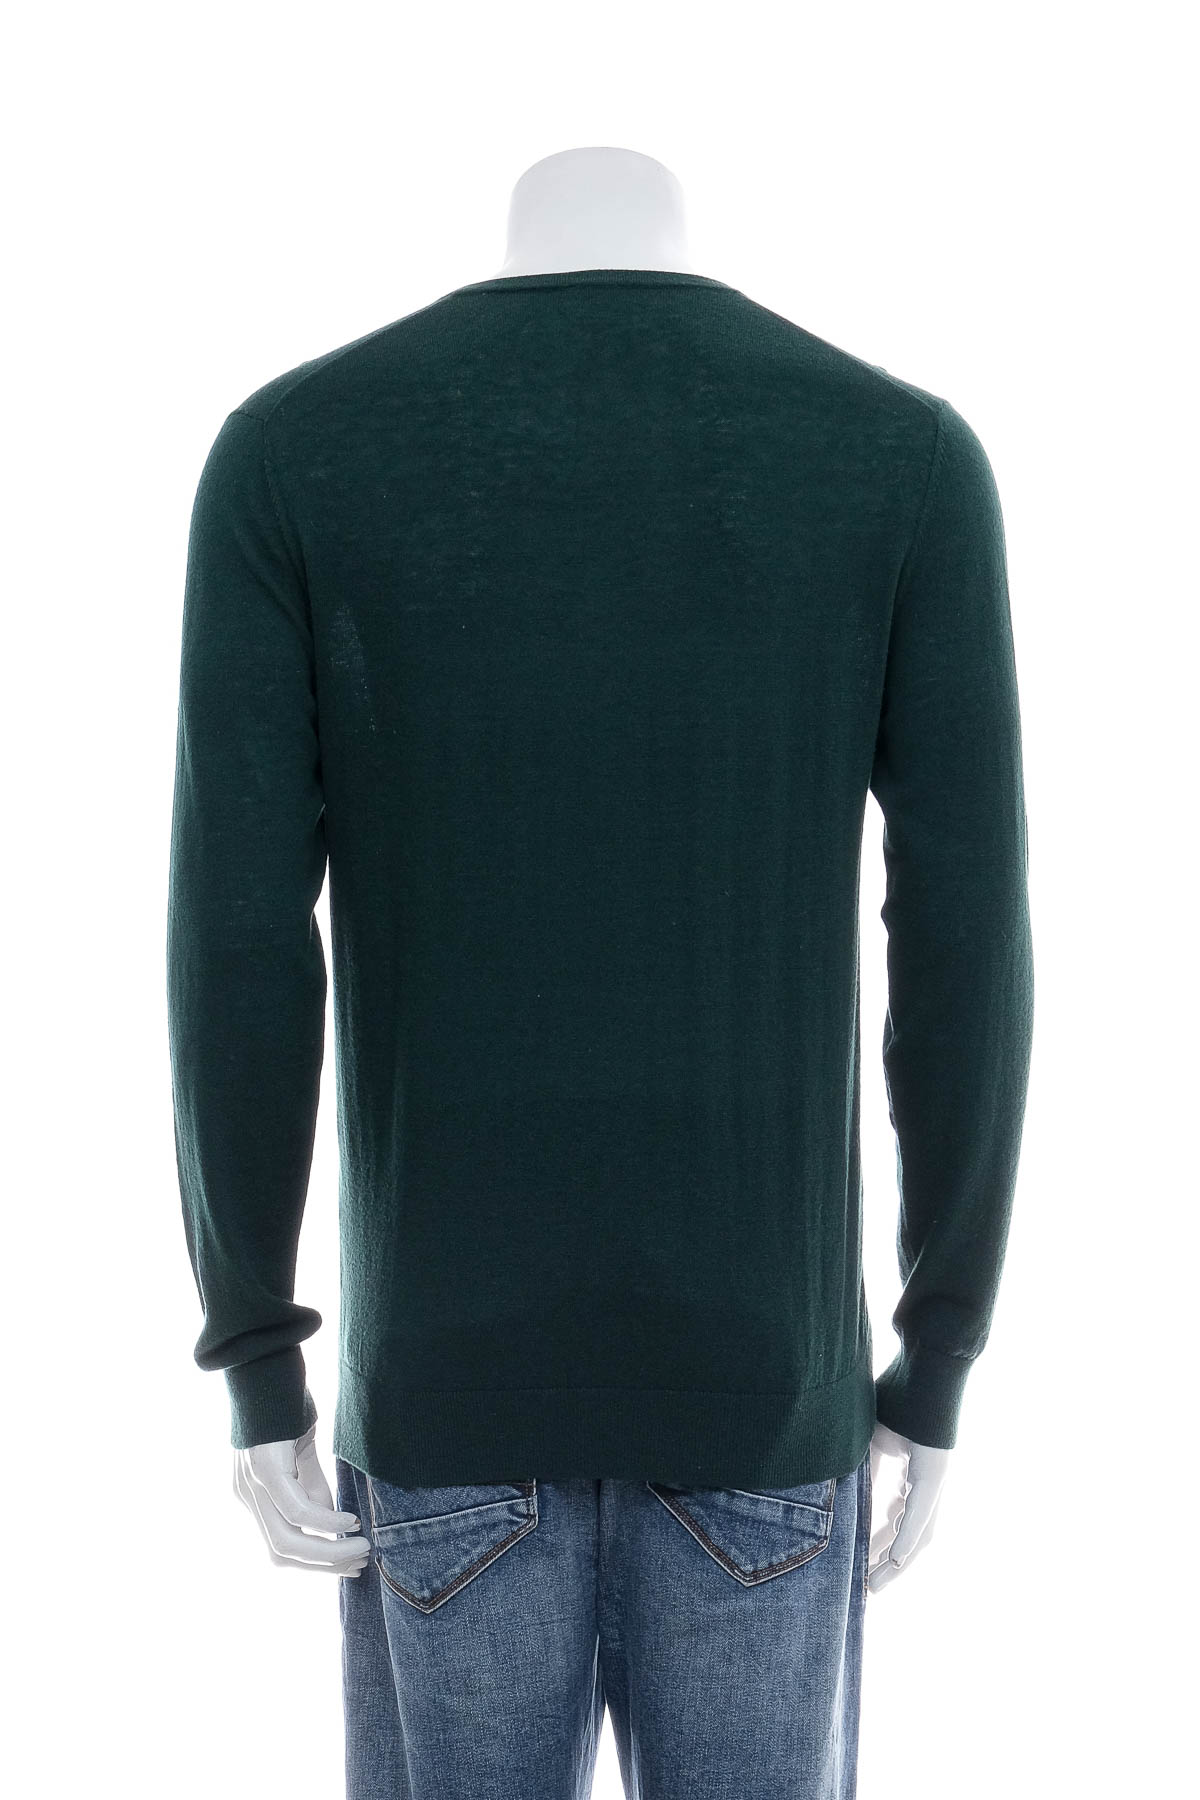 Men's sweater - Olymp - 1